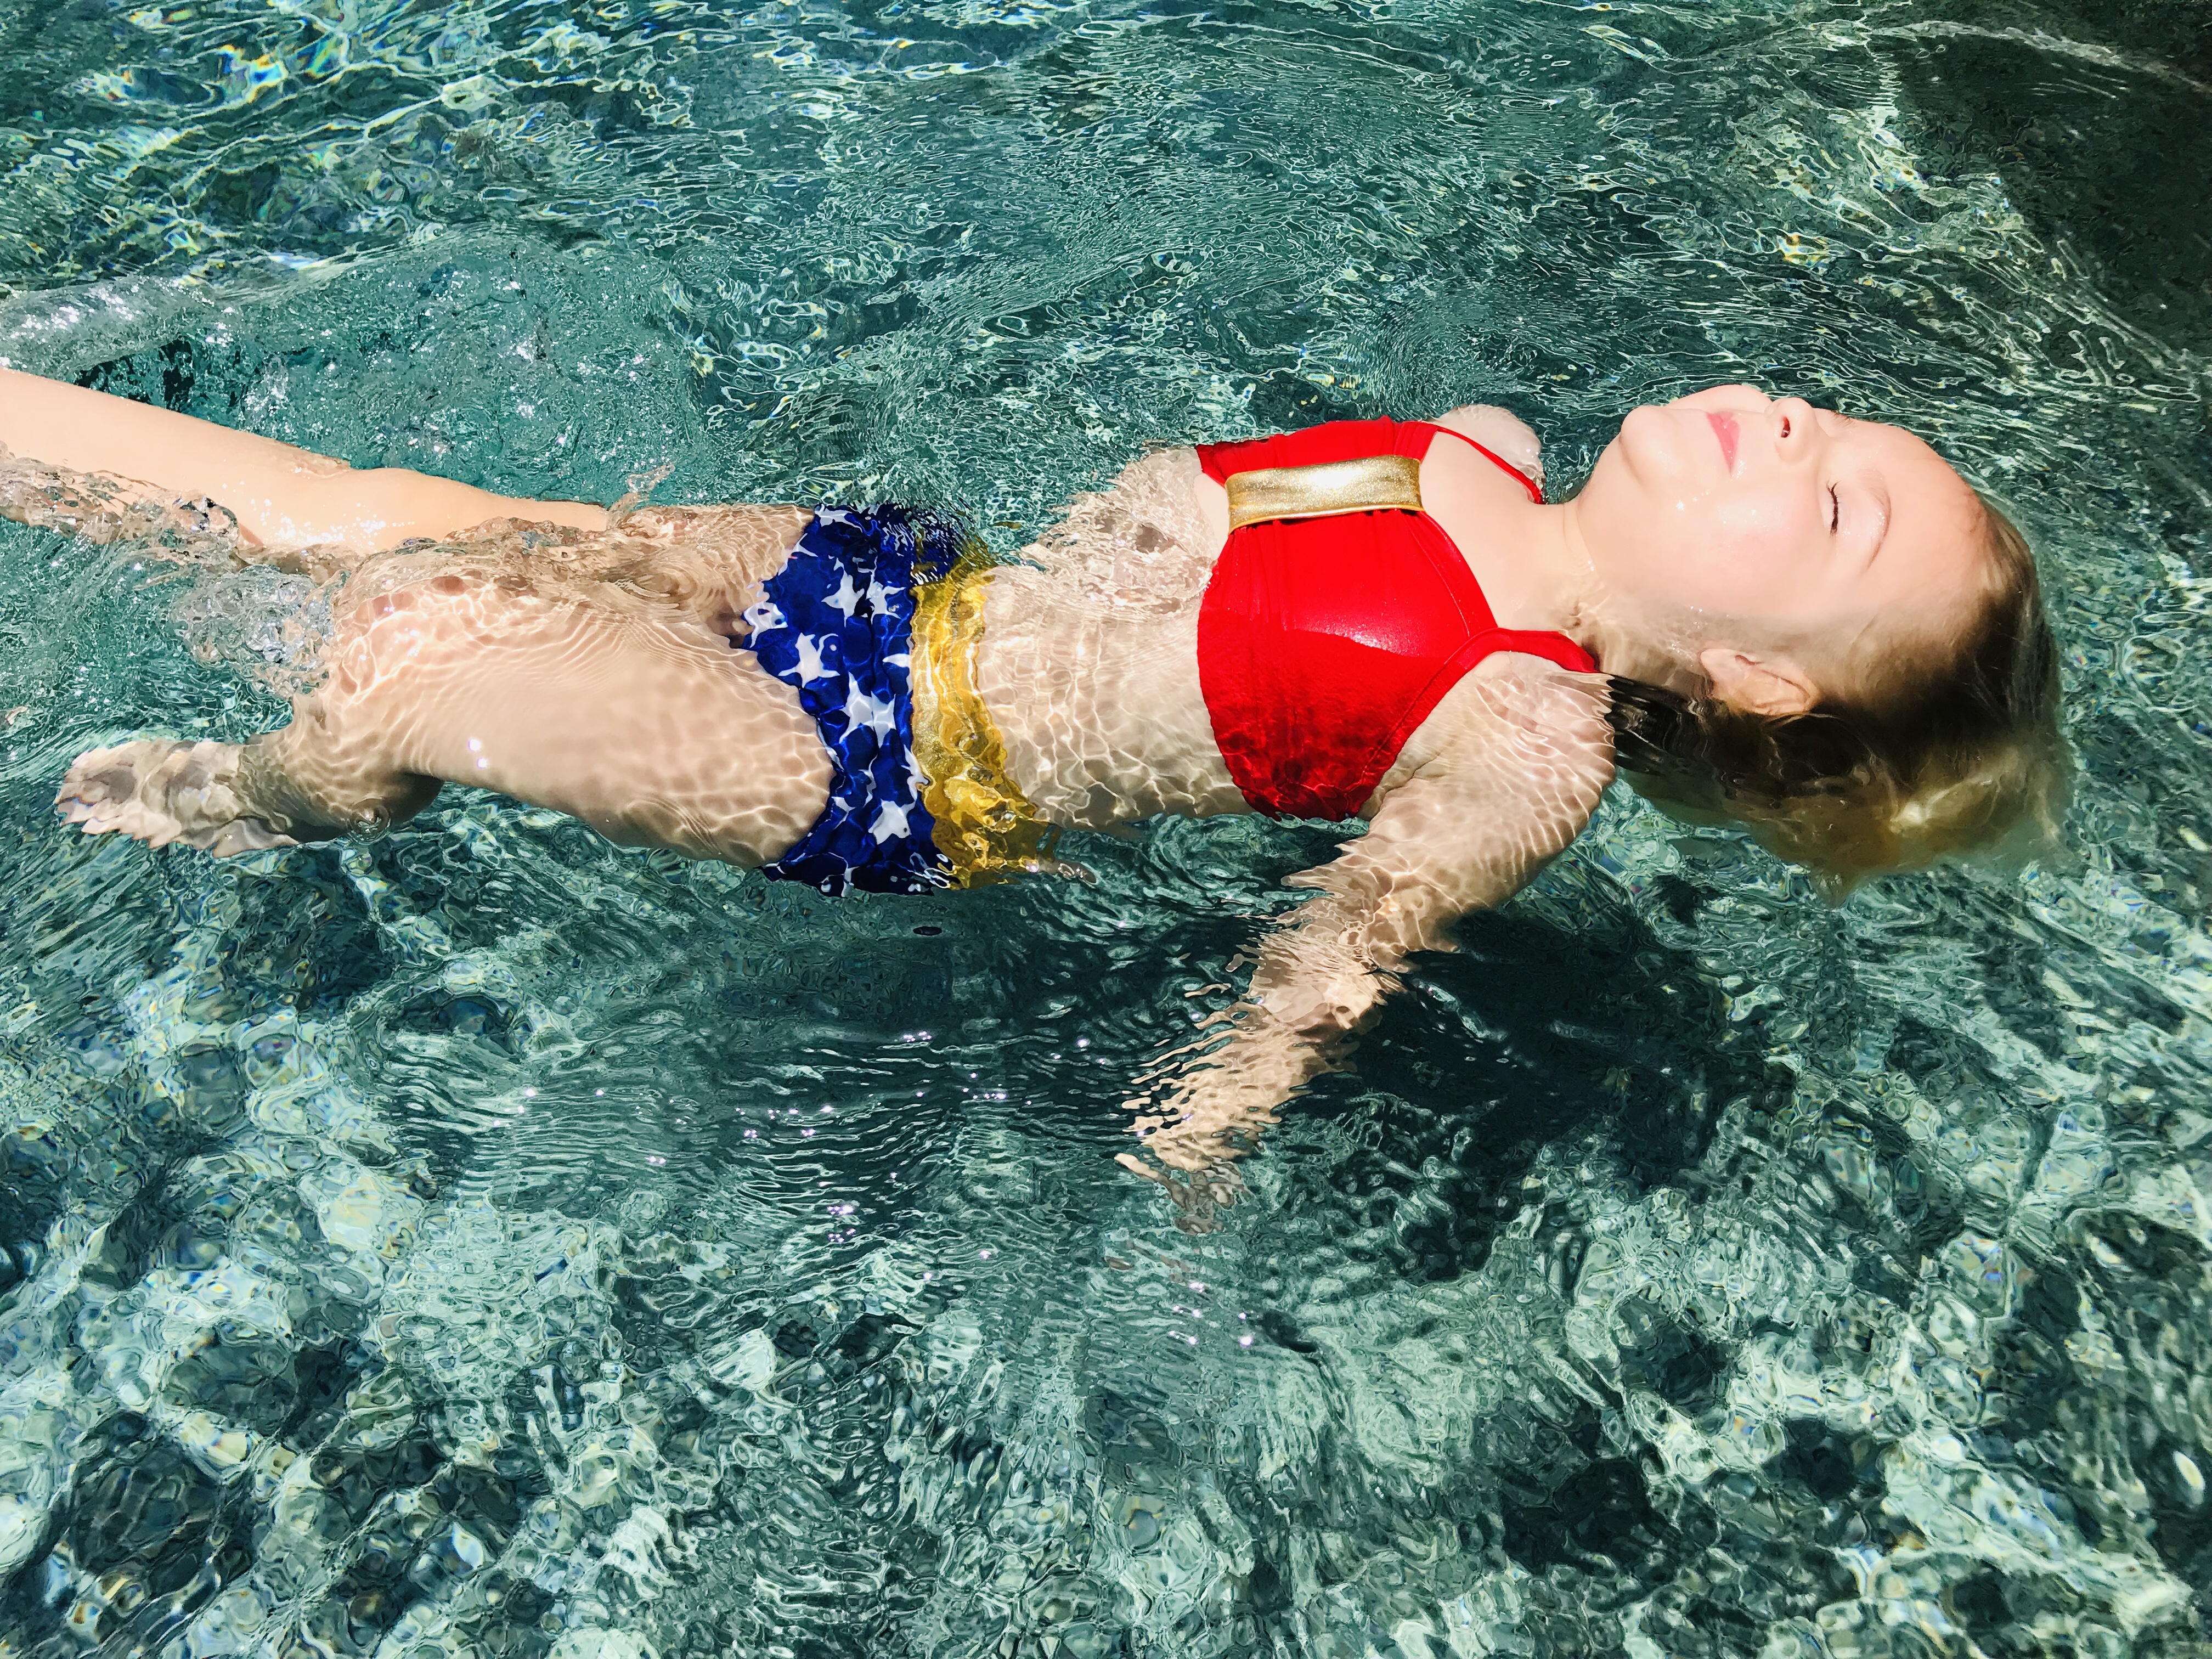 Did you know Wonder Woman can swim?